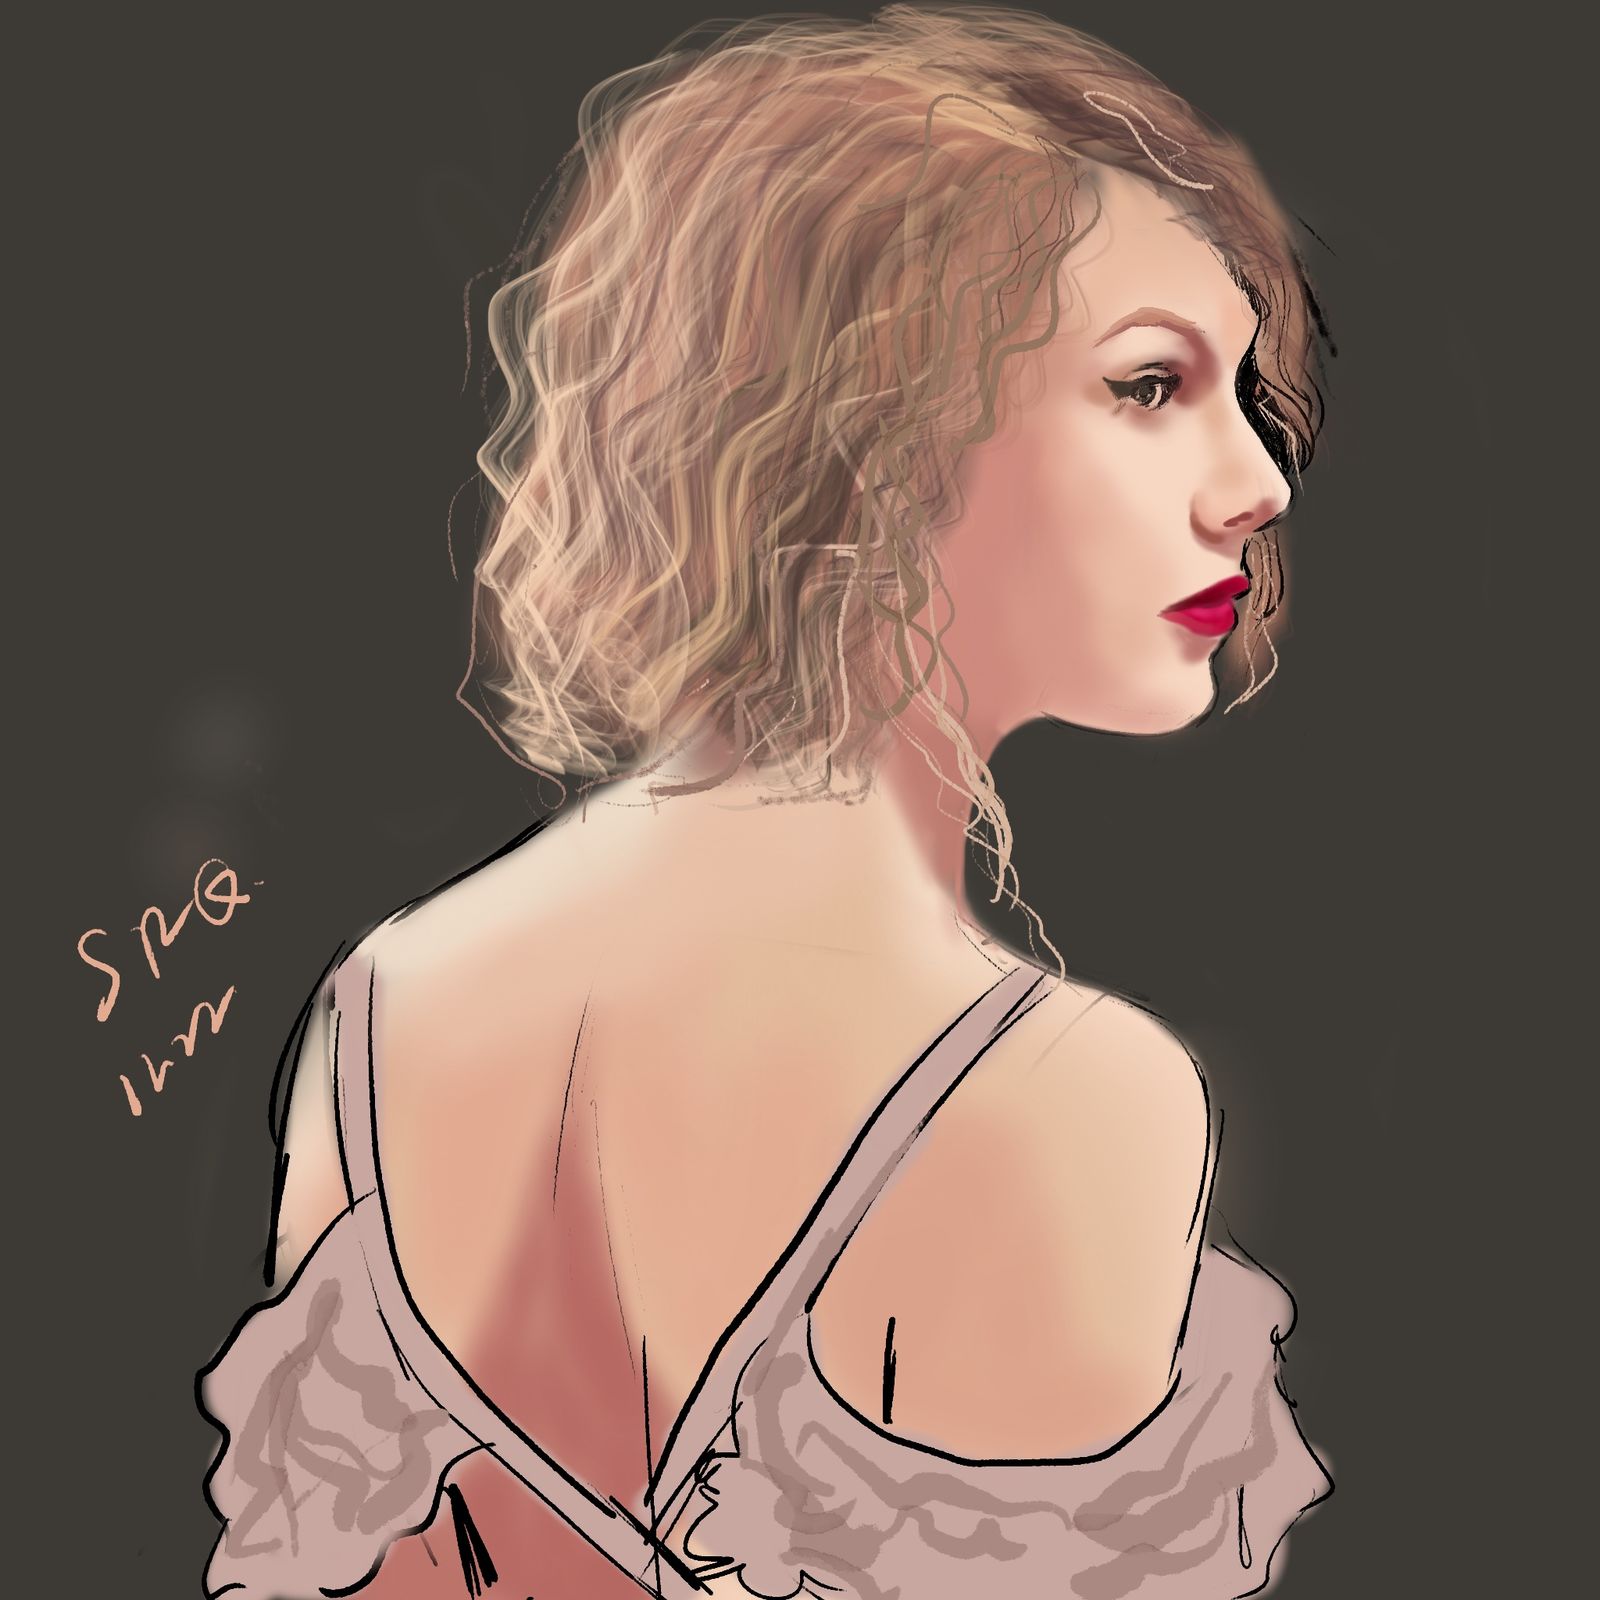 Taylor Swift插画图片壁纸